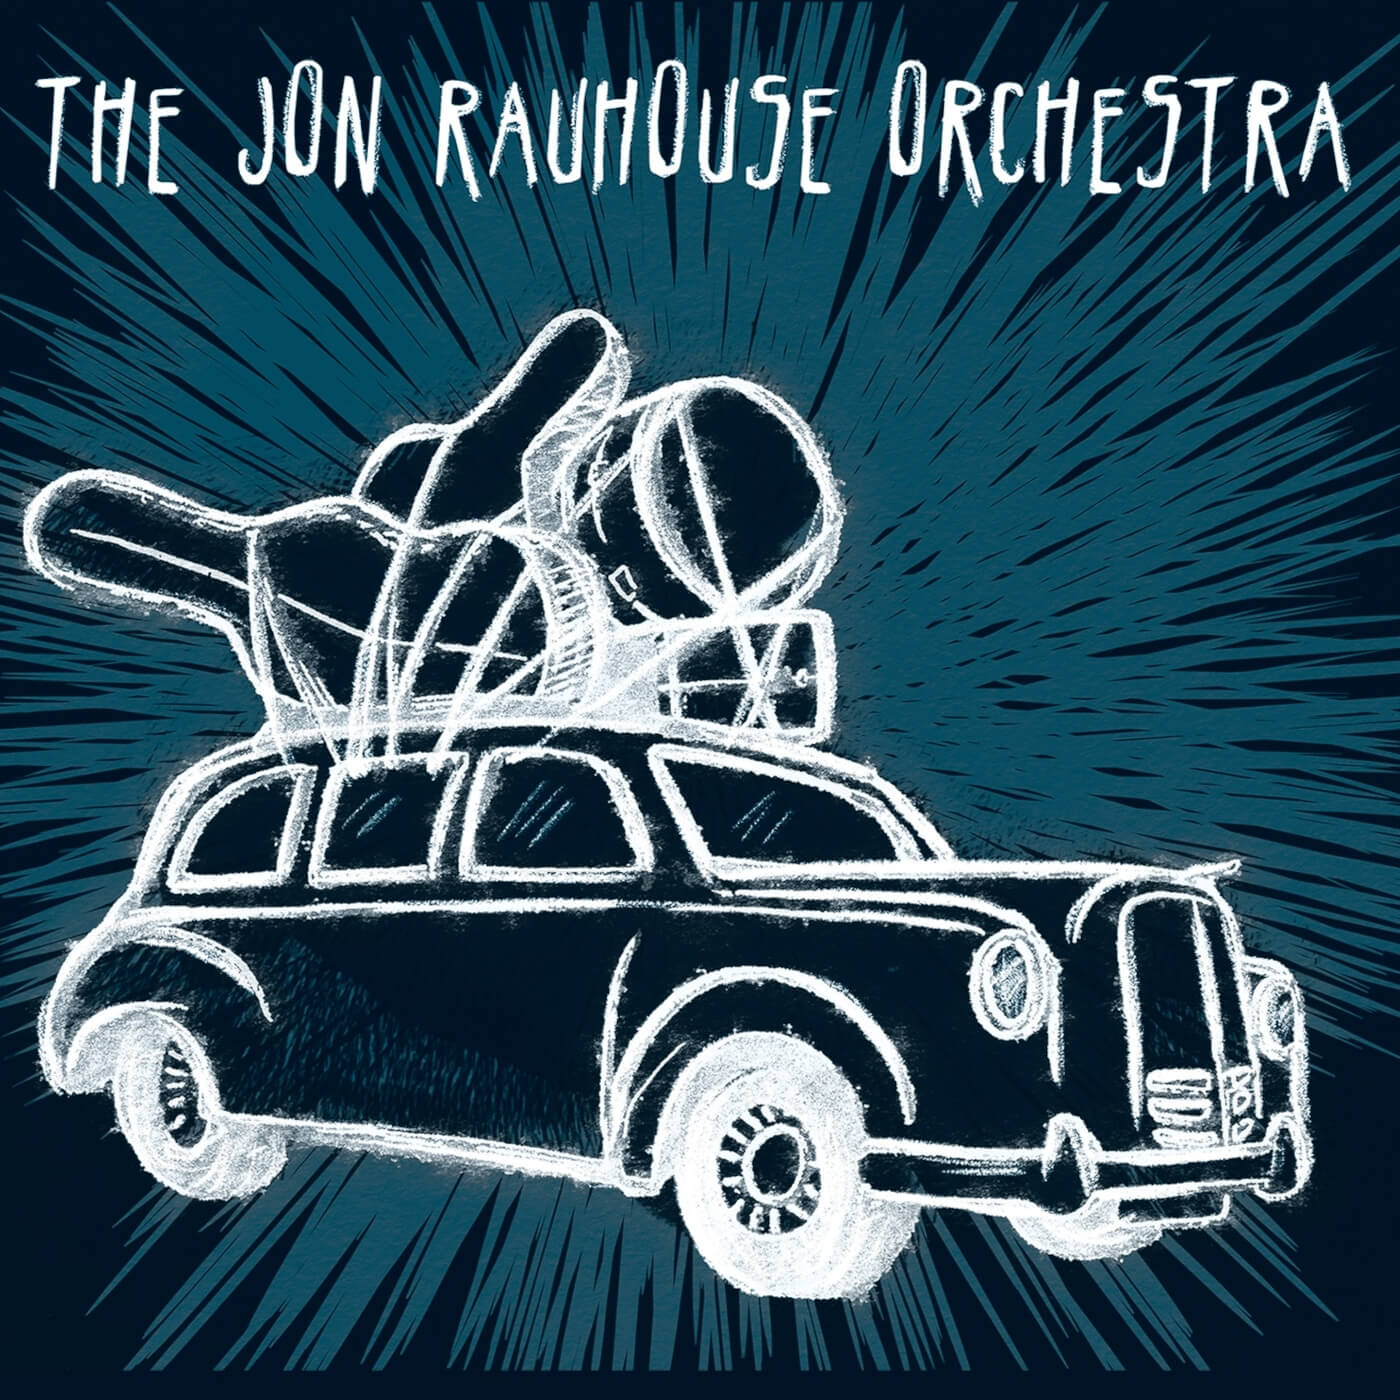 Jon Rauhouse Orchestra